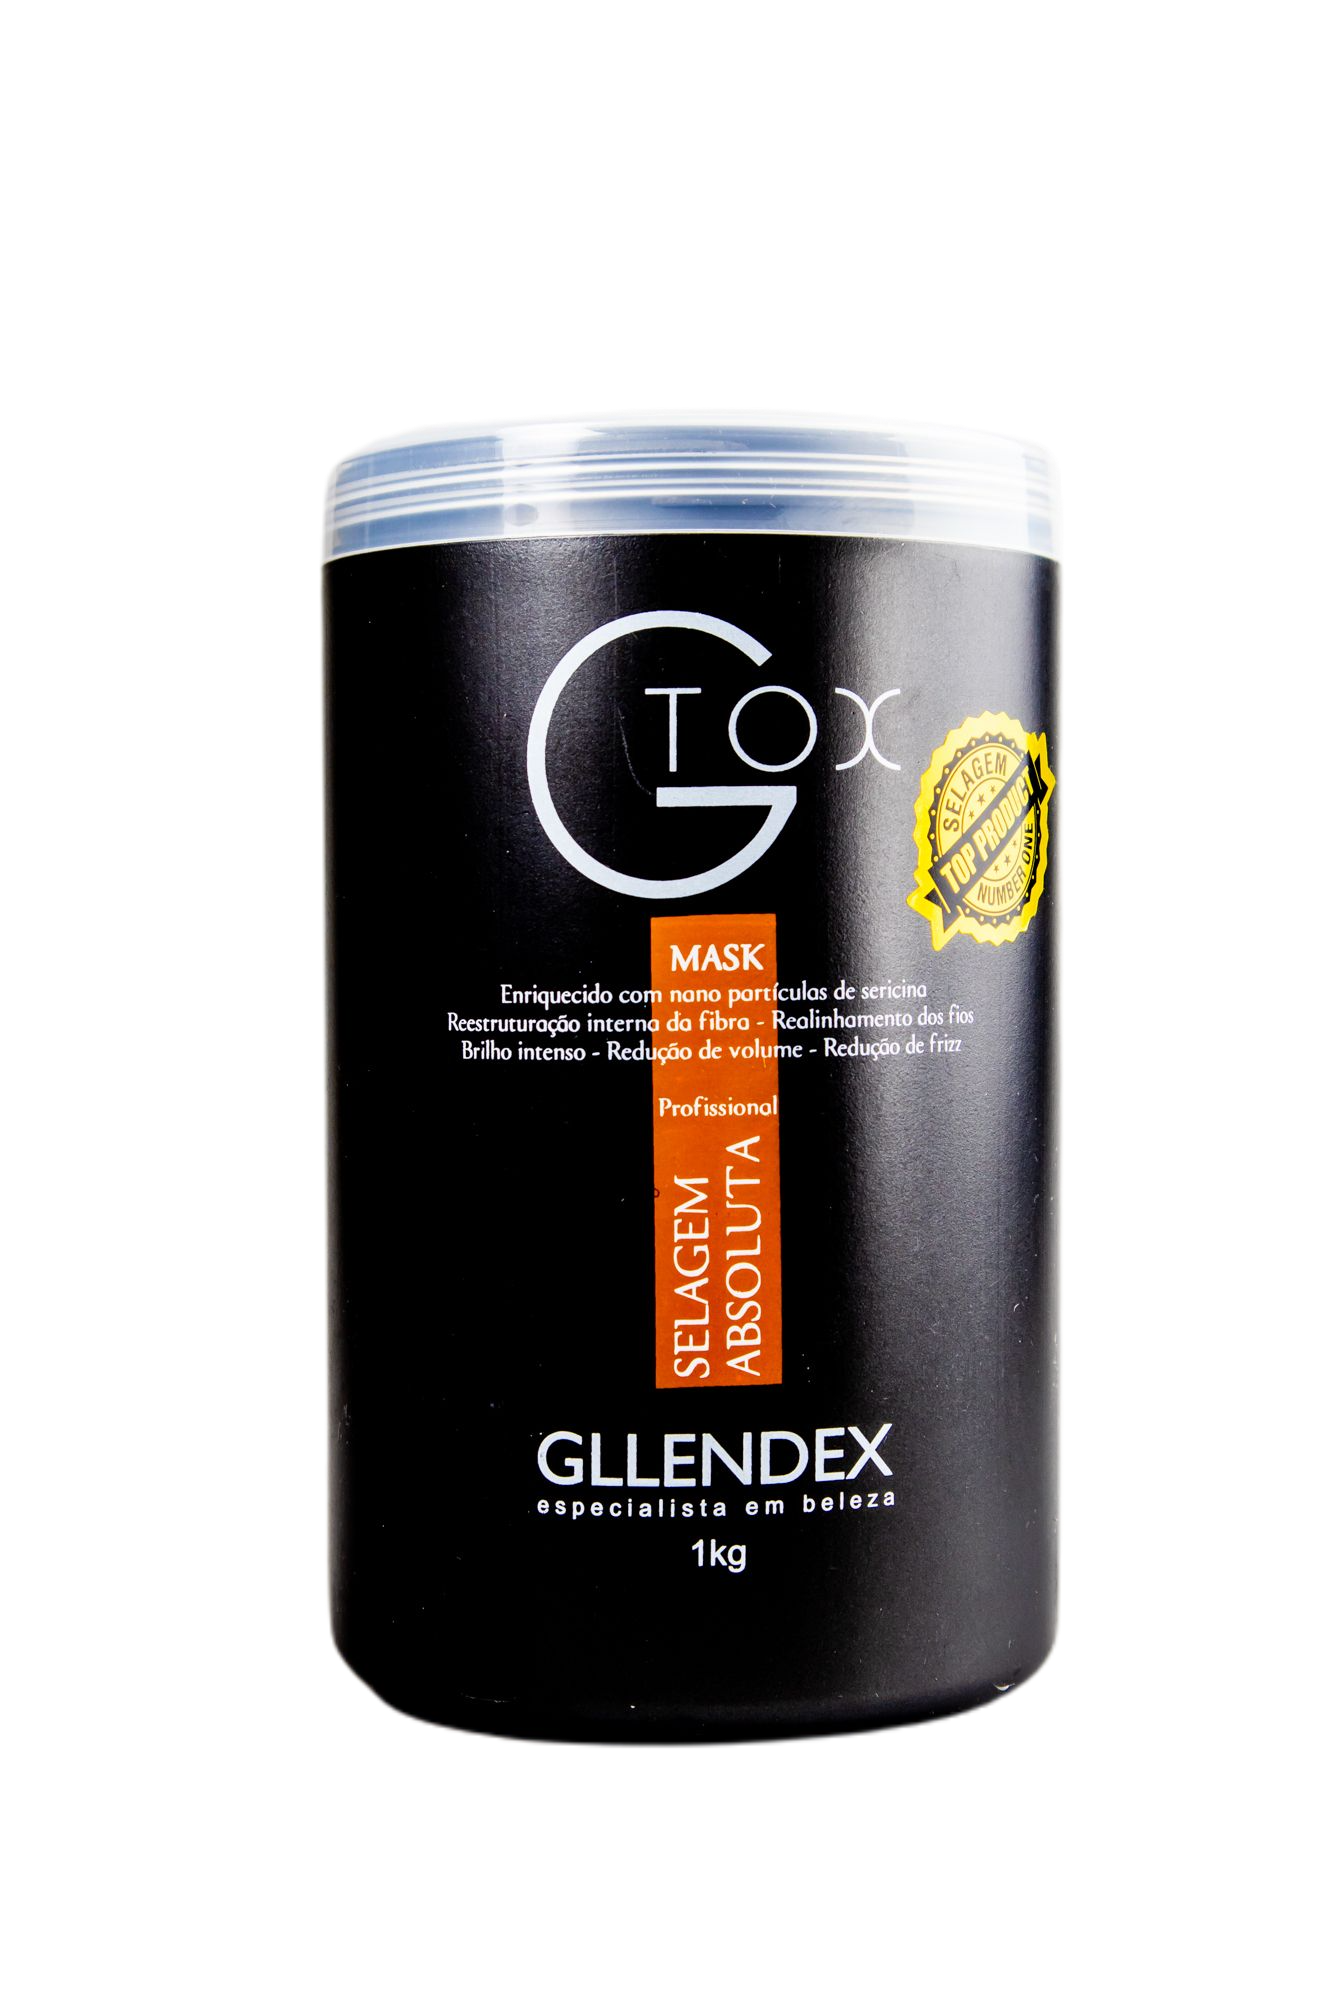 Gllendex Brazilian Keratin Treatment Brazilian Professional Hair Treatment G-tox Absolute Sealing Mask 1Kg - Gllendex